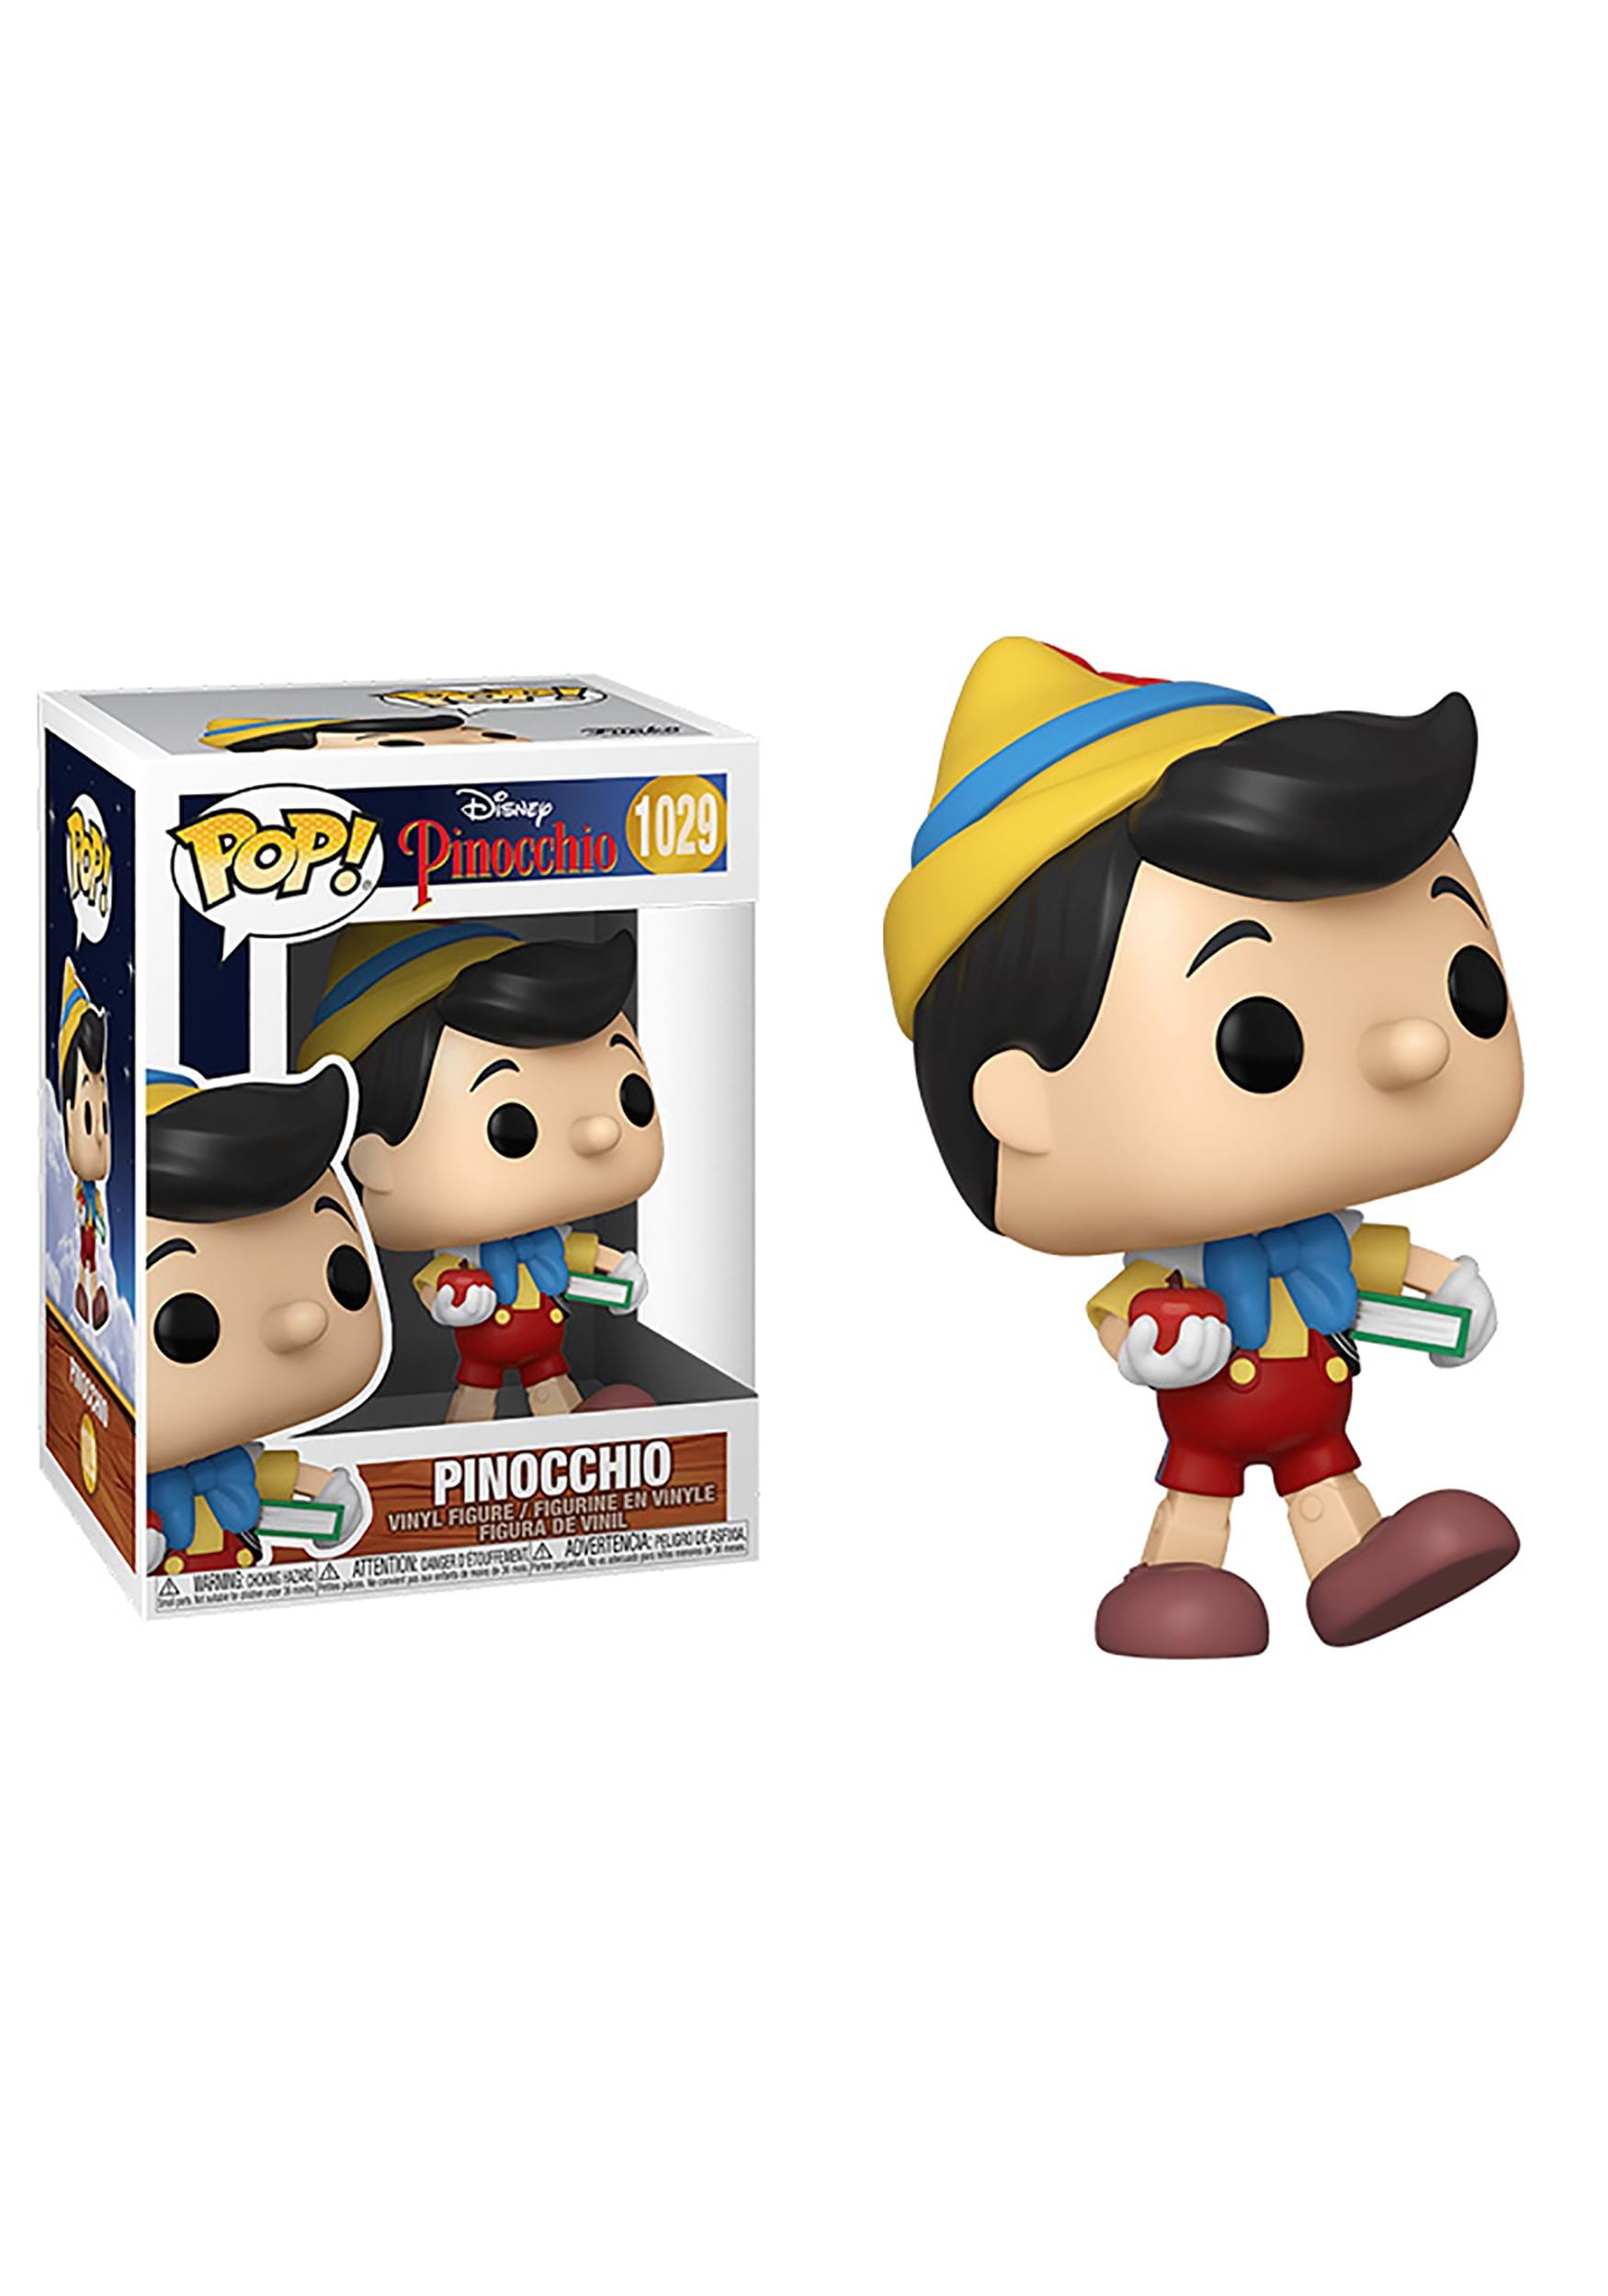 NEW & In Stock Geppetto Pinocchio Disney - Vinyl Figure UK Funko Pop 